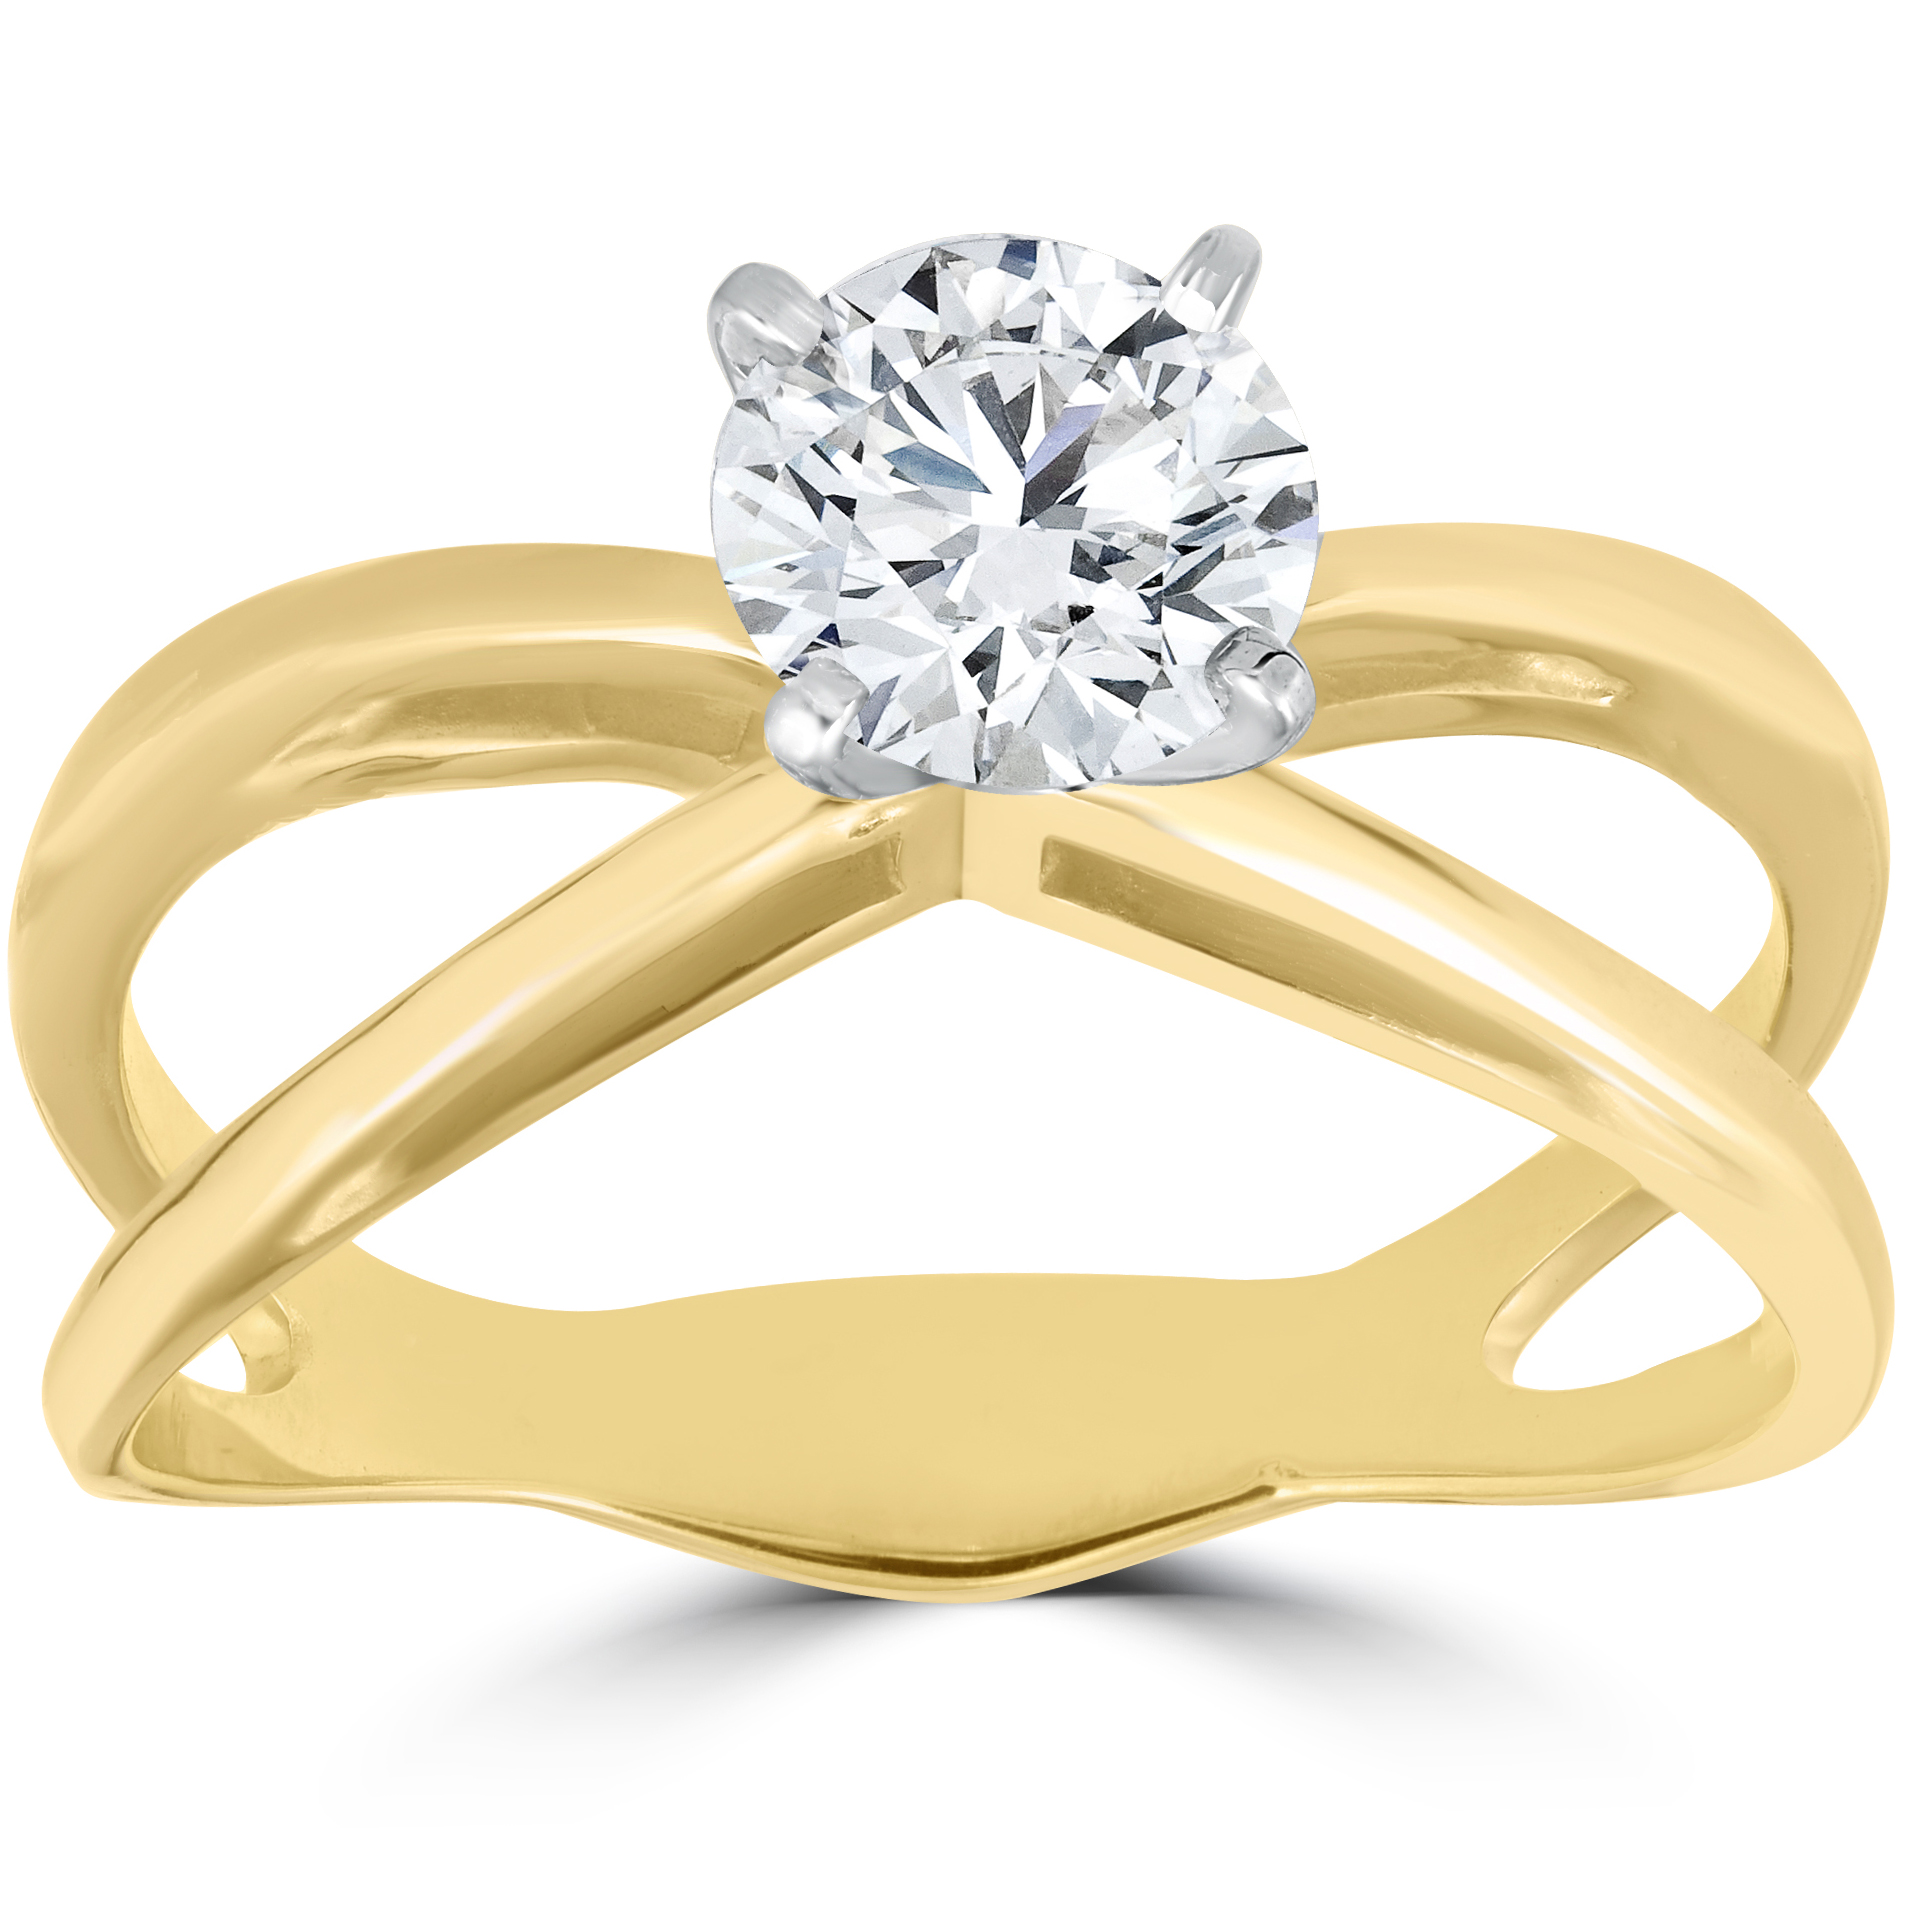 1 ct Solitaire Diamond Engagement Ring 14k Yellow Gold | eBay